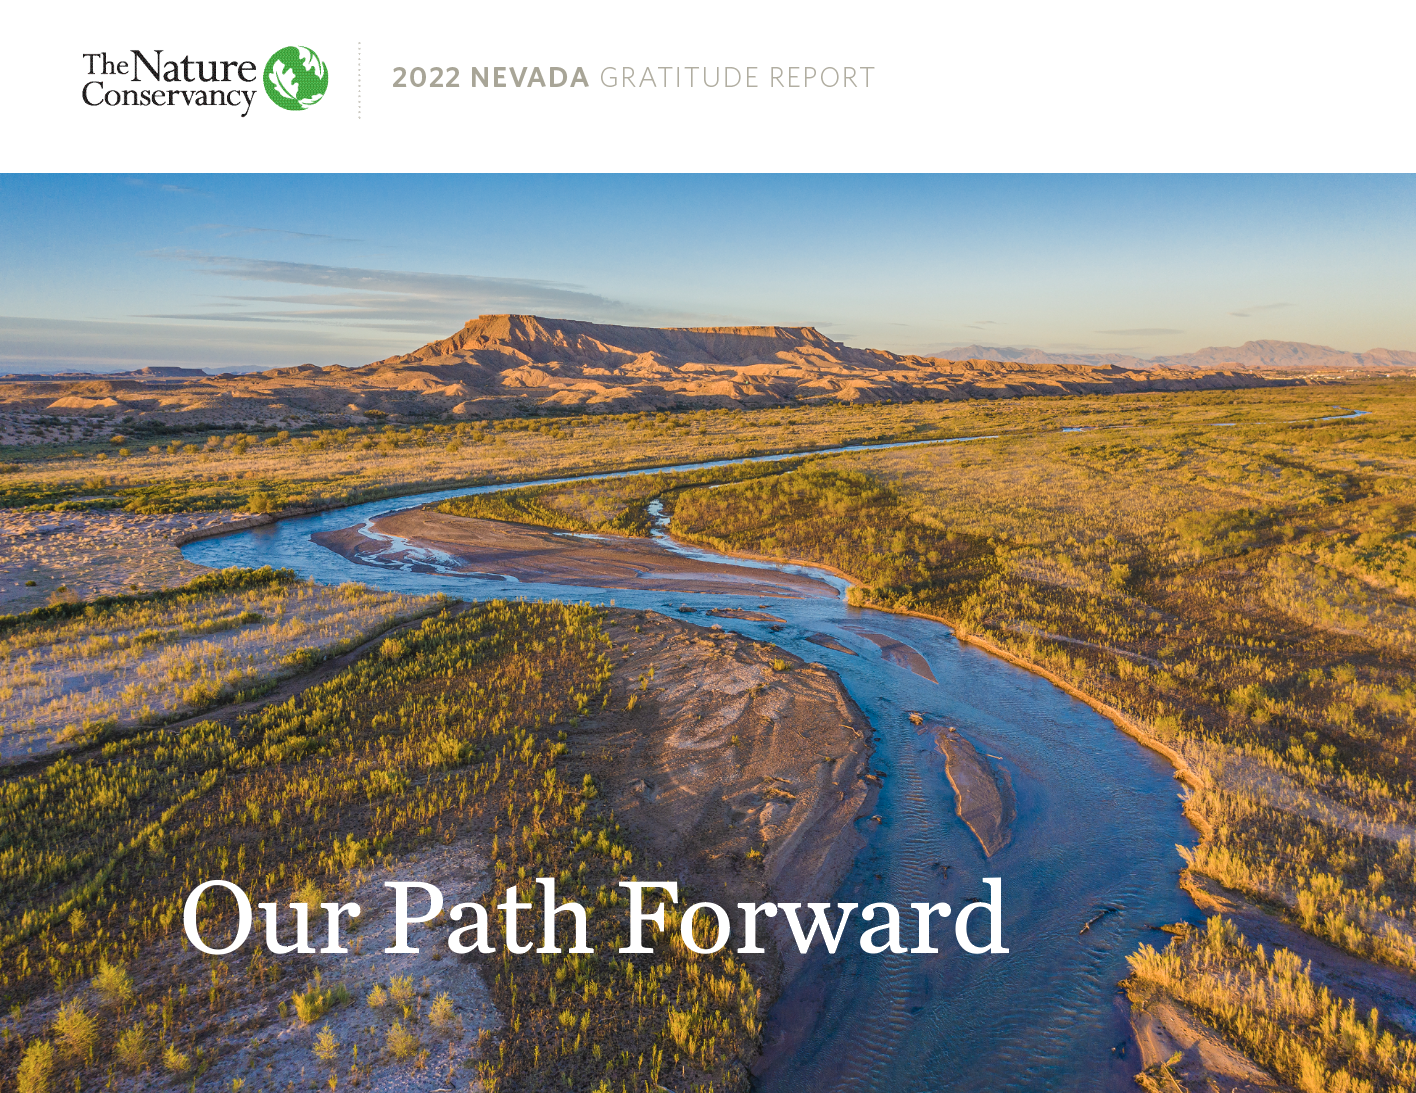 Nevada 2022 gratitude report cover thumbnail.